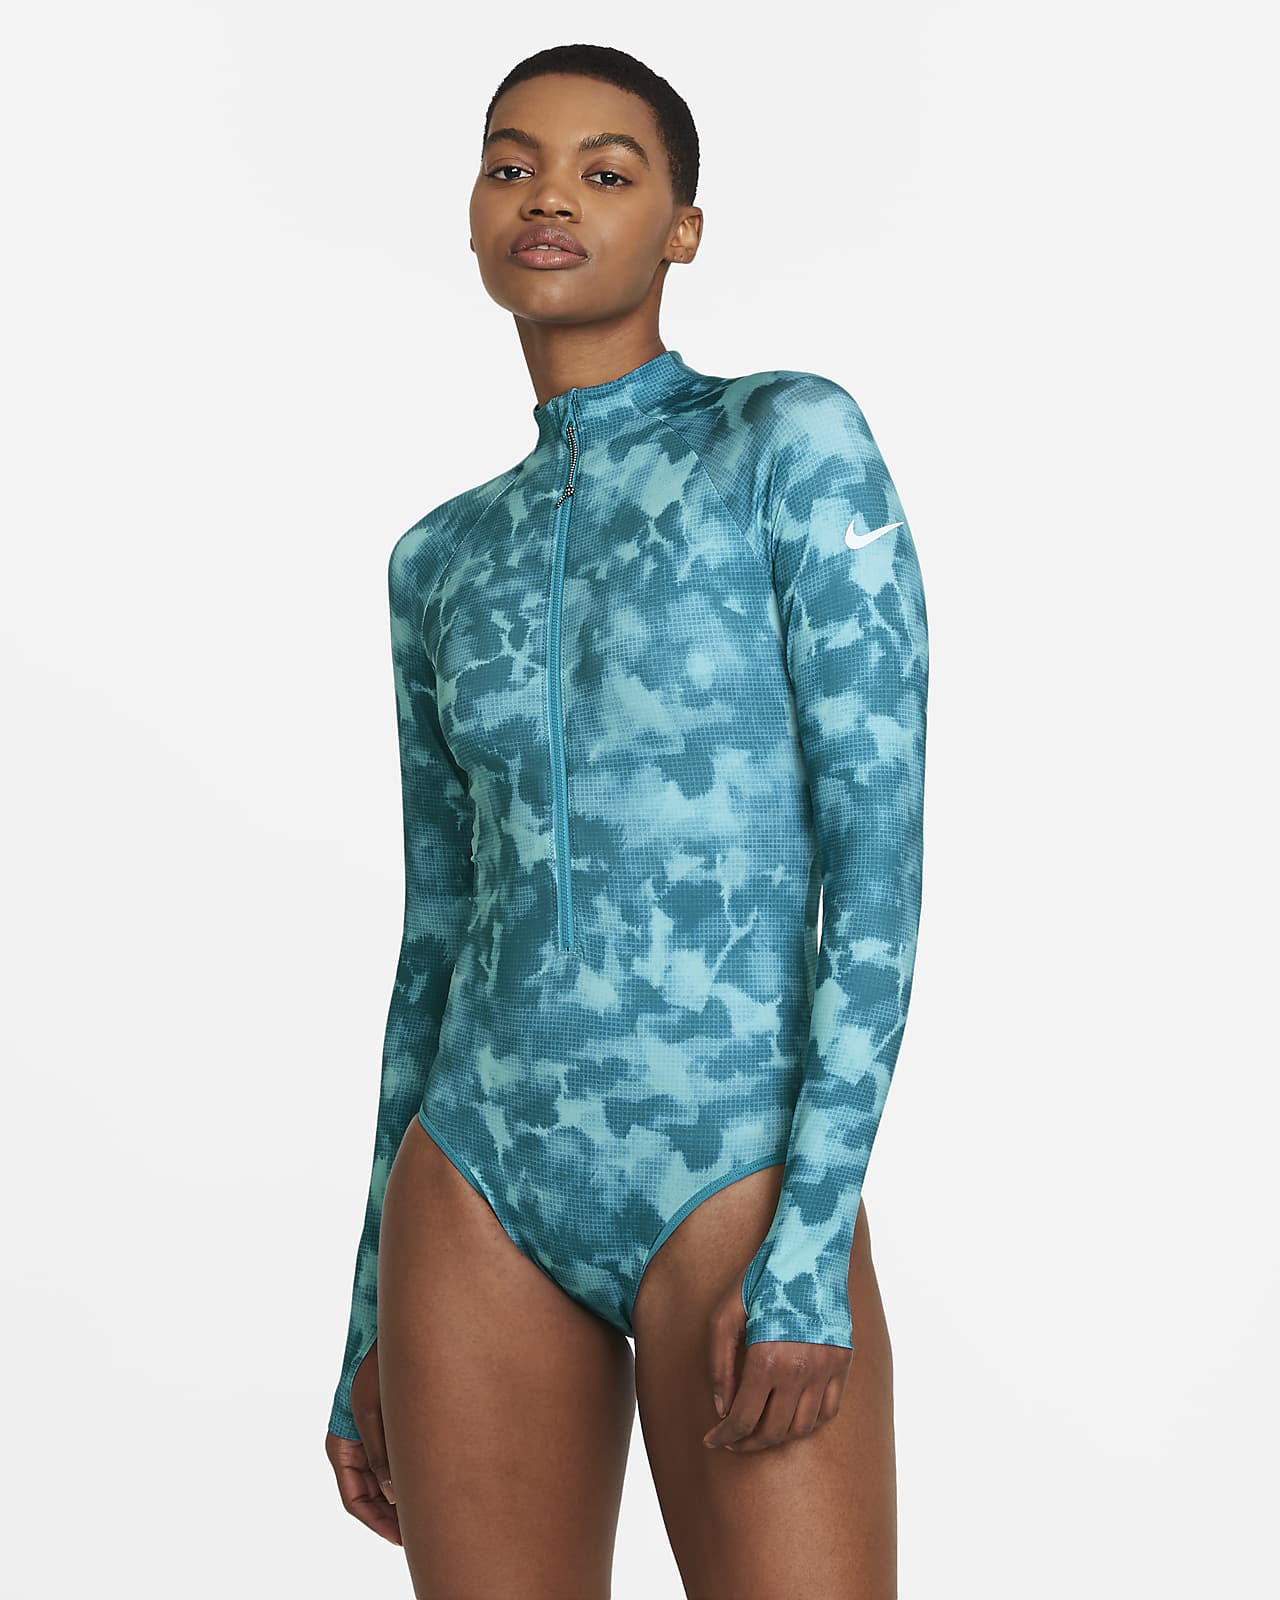 Long-Sleeve 1-Piece Swimsuit. Nike 